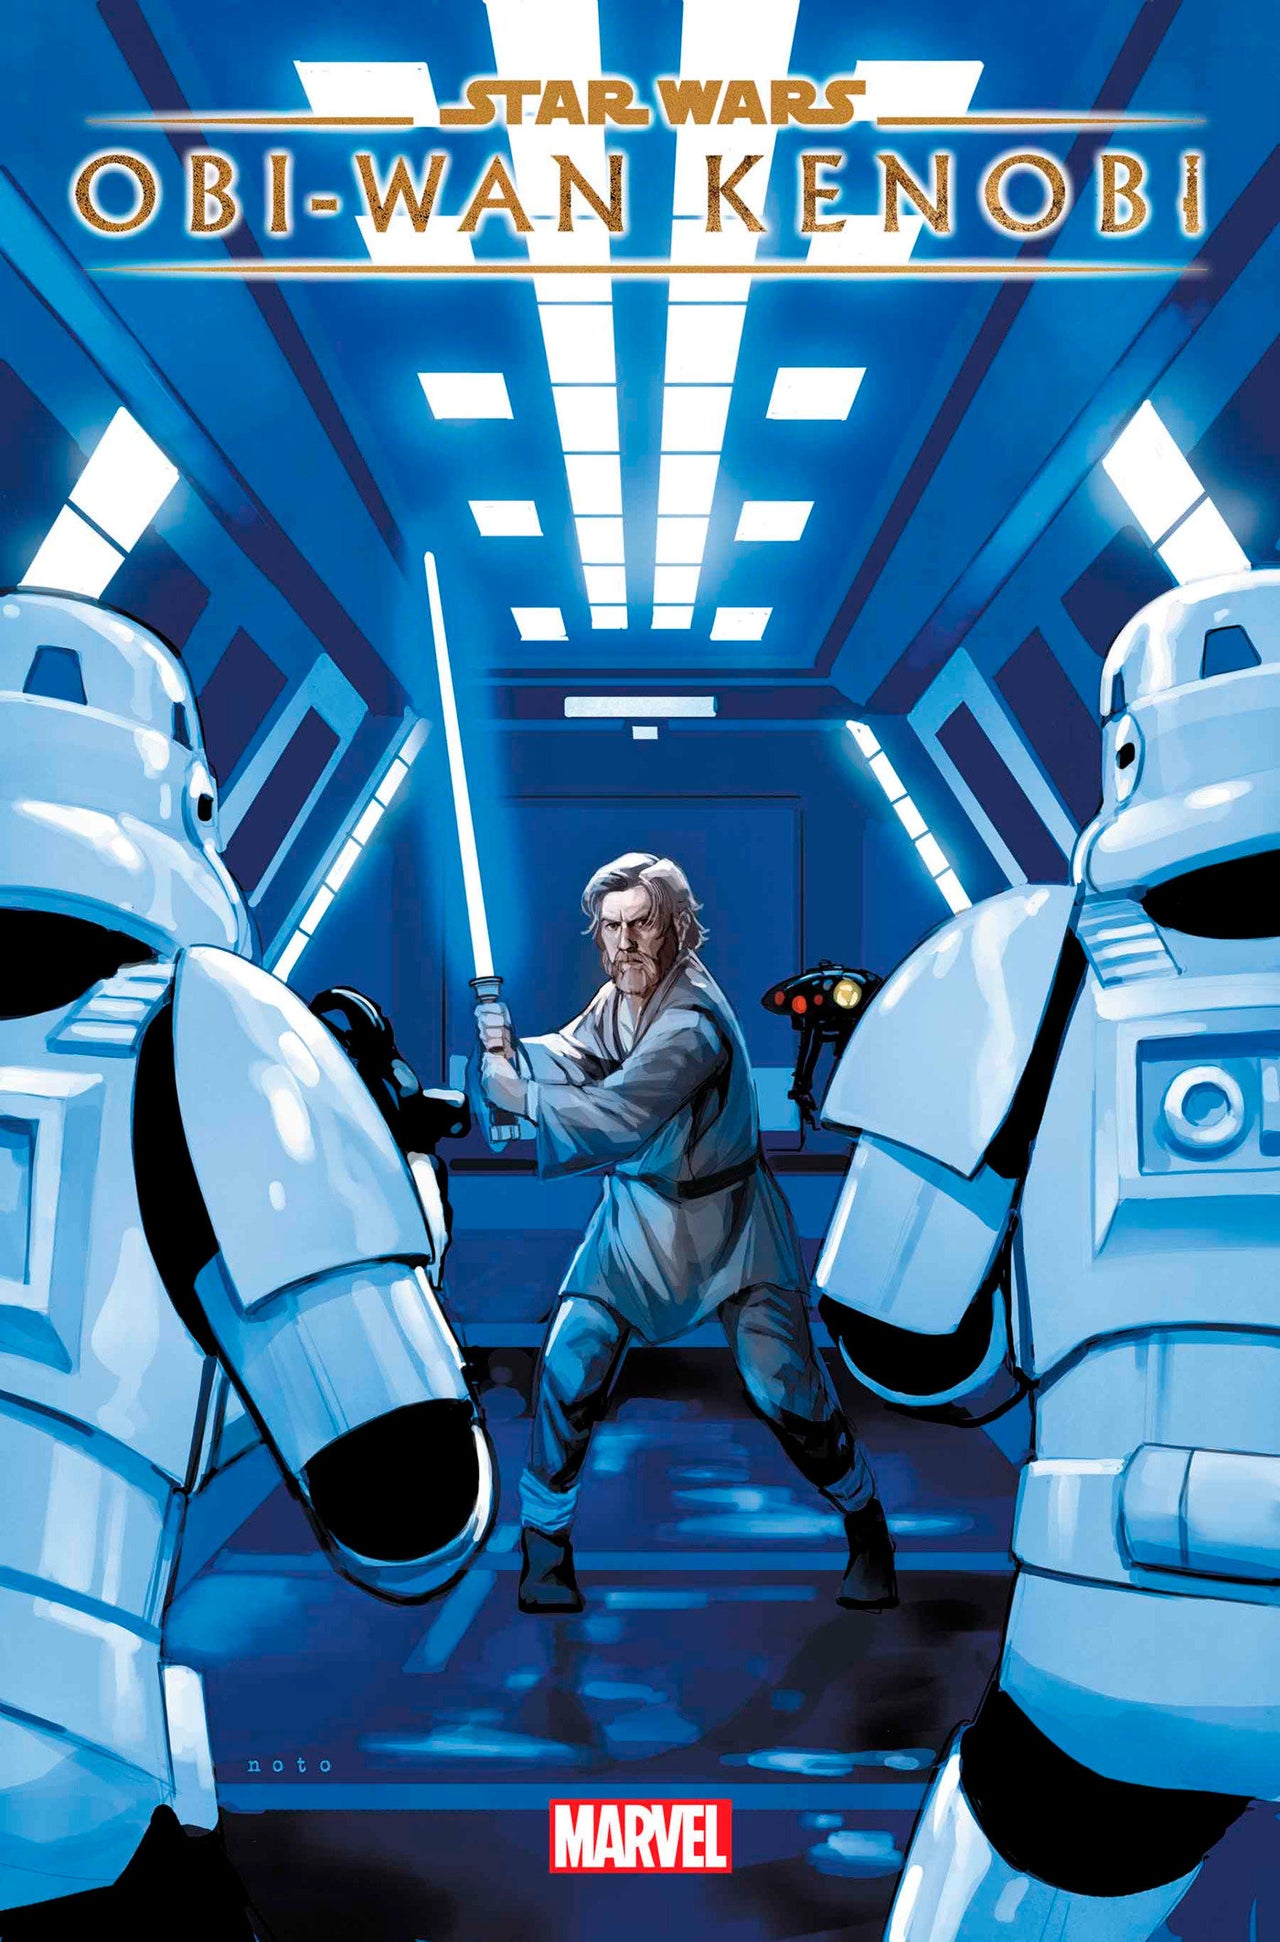 Star Wars: Obi-Wan Kenobi (2023) #4